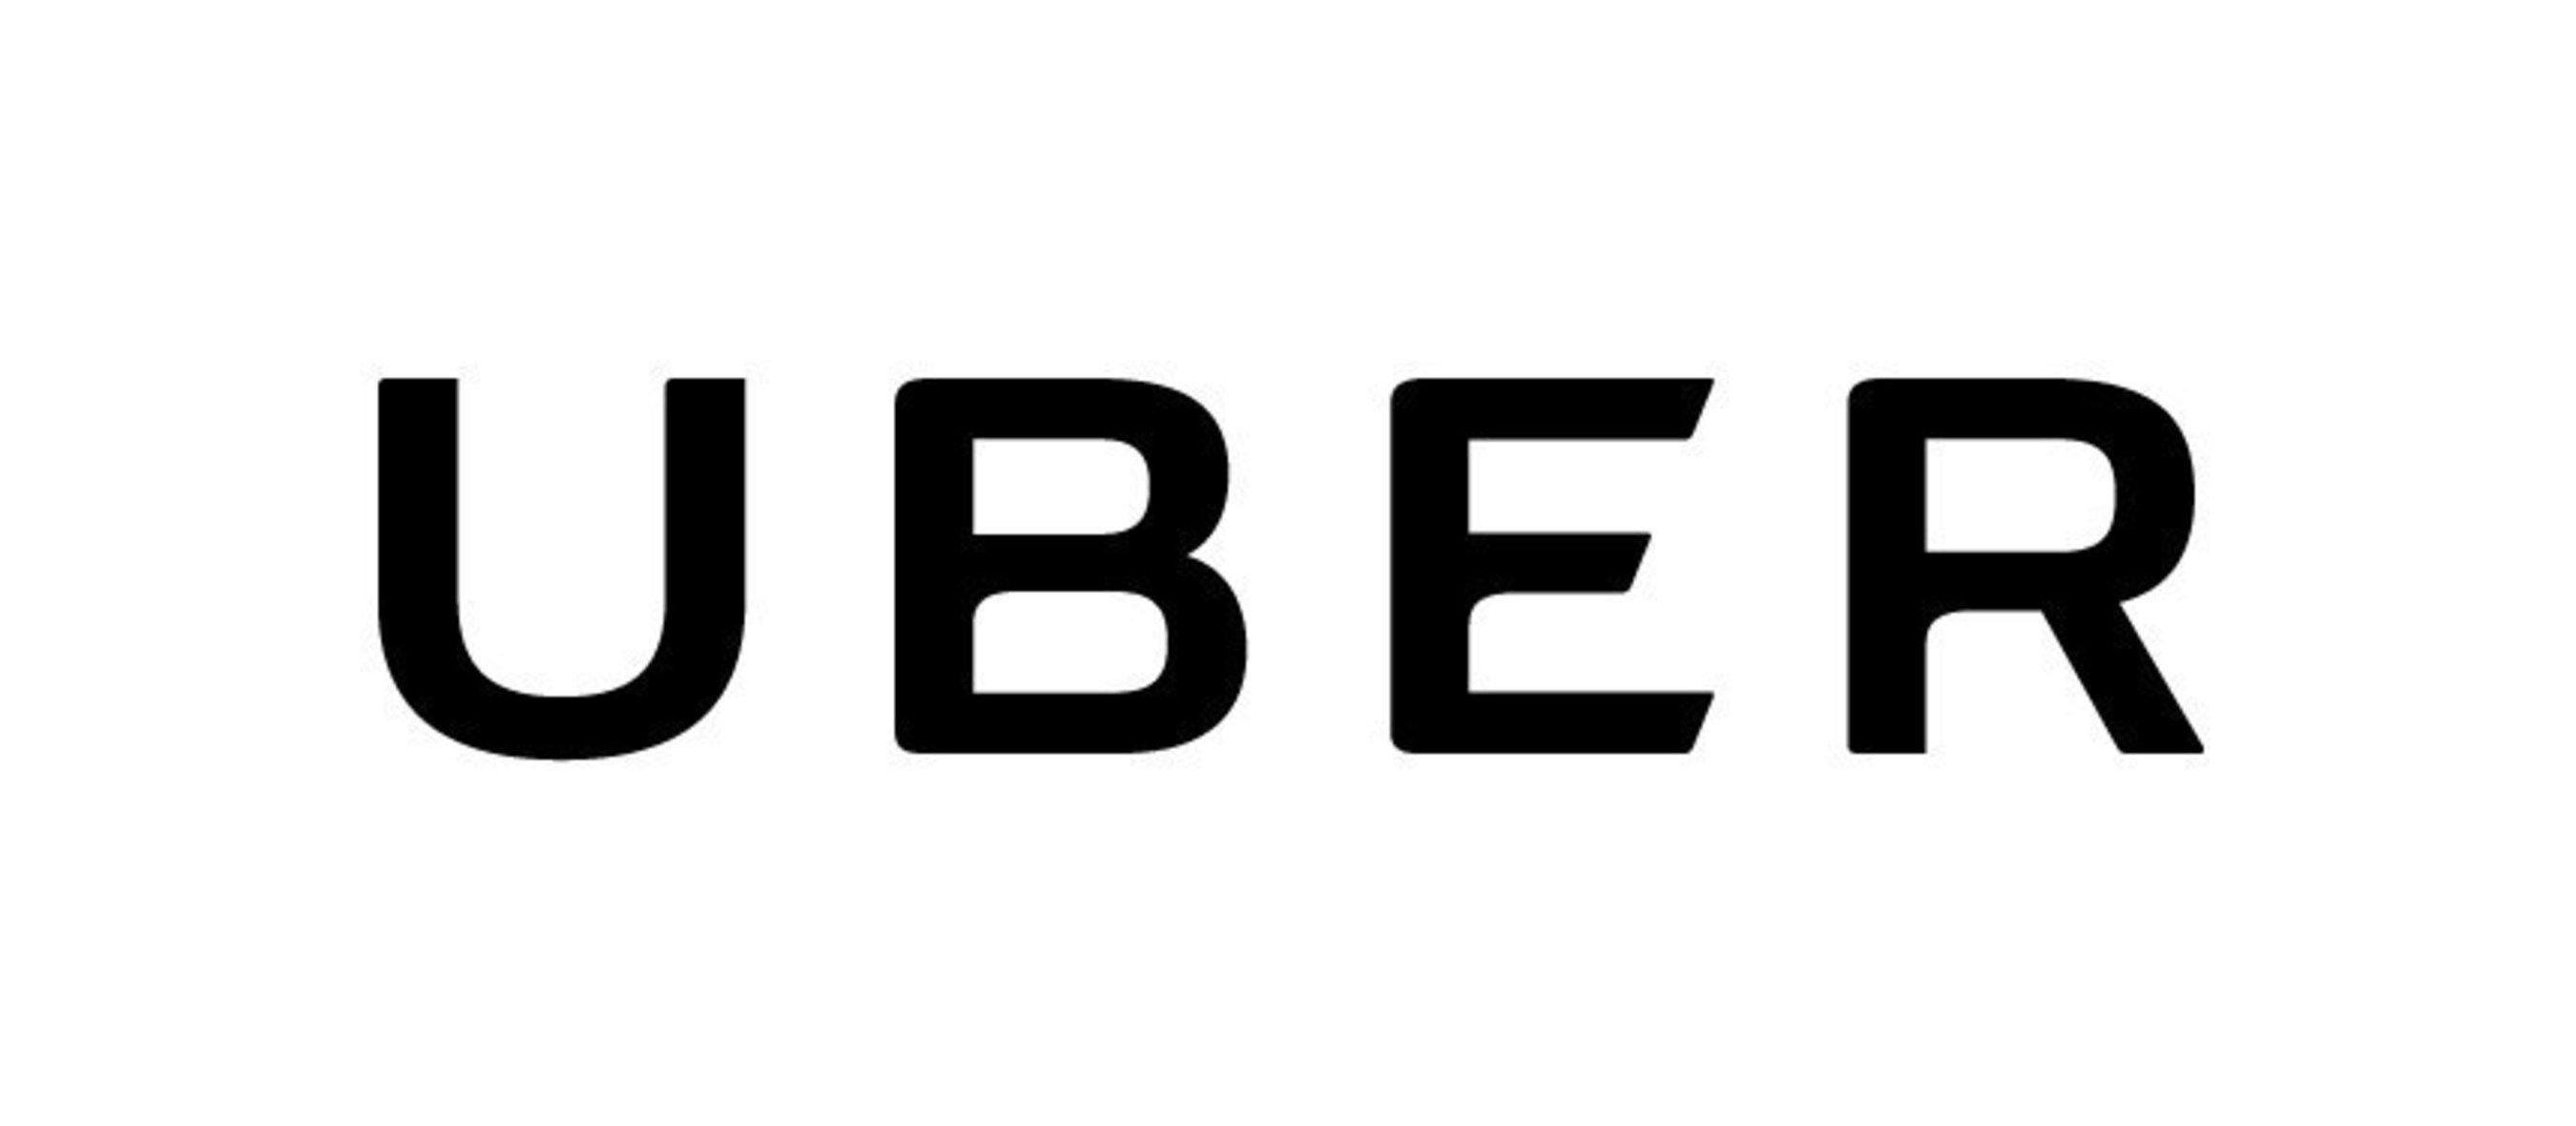 HackensackUMC Logo - Uber, HackensackUMC Team Up For Nation's First Rideshare Hospital